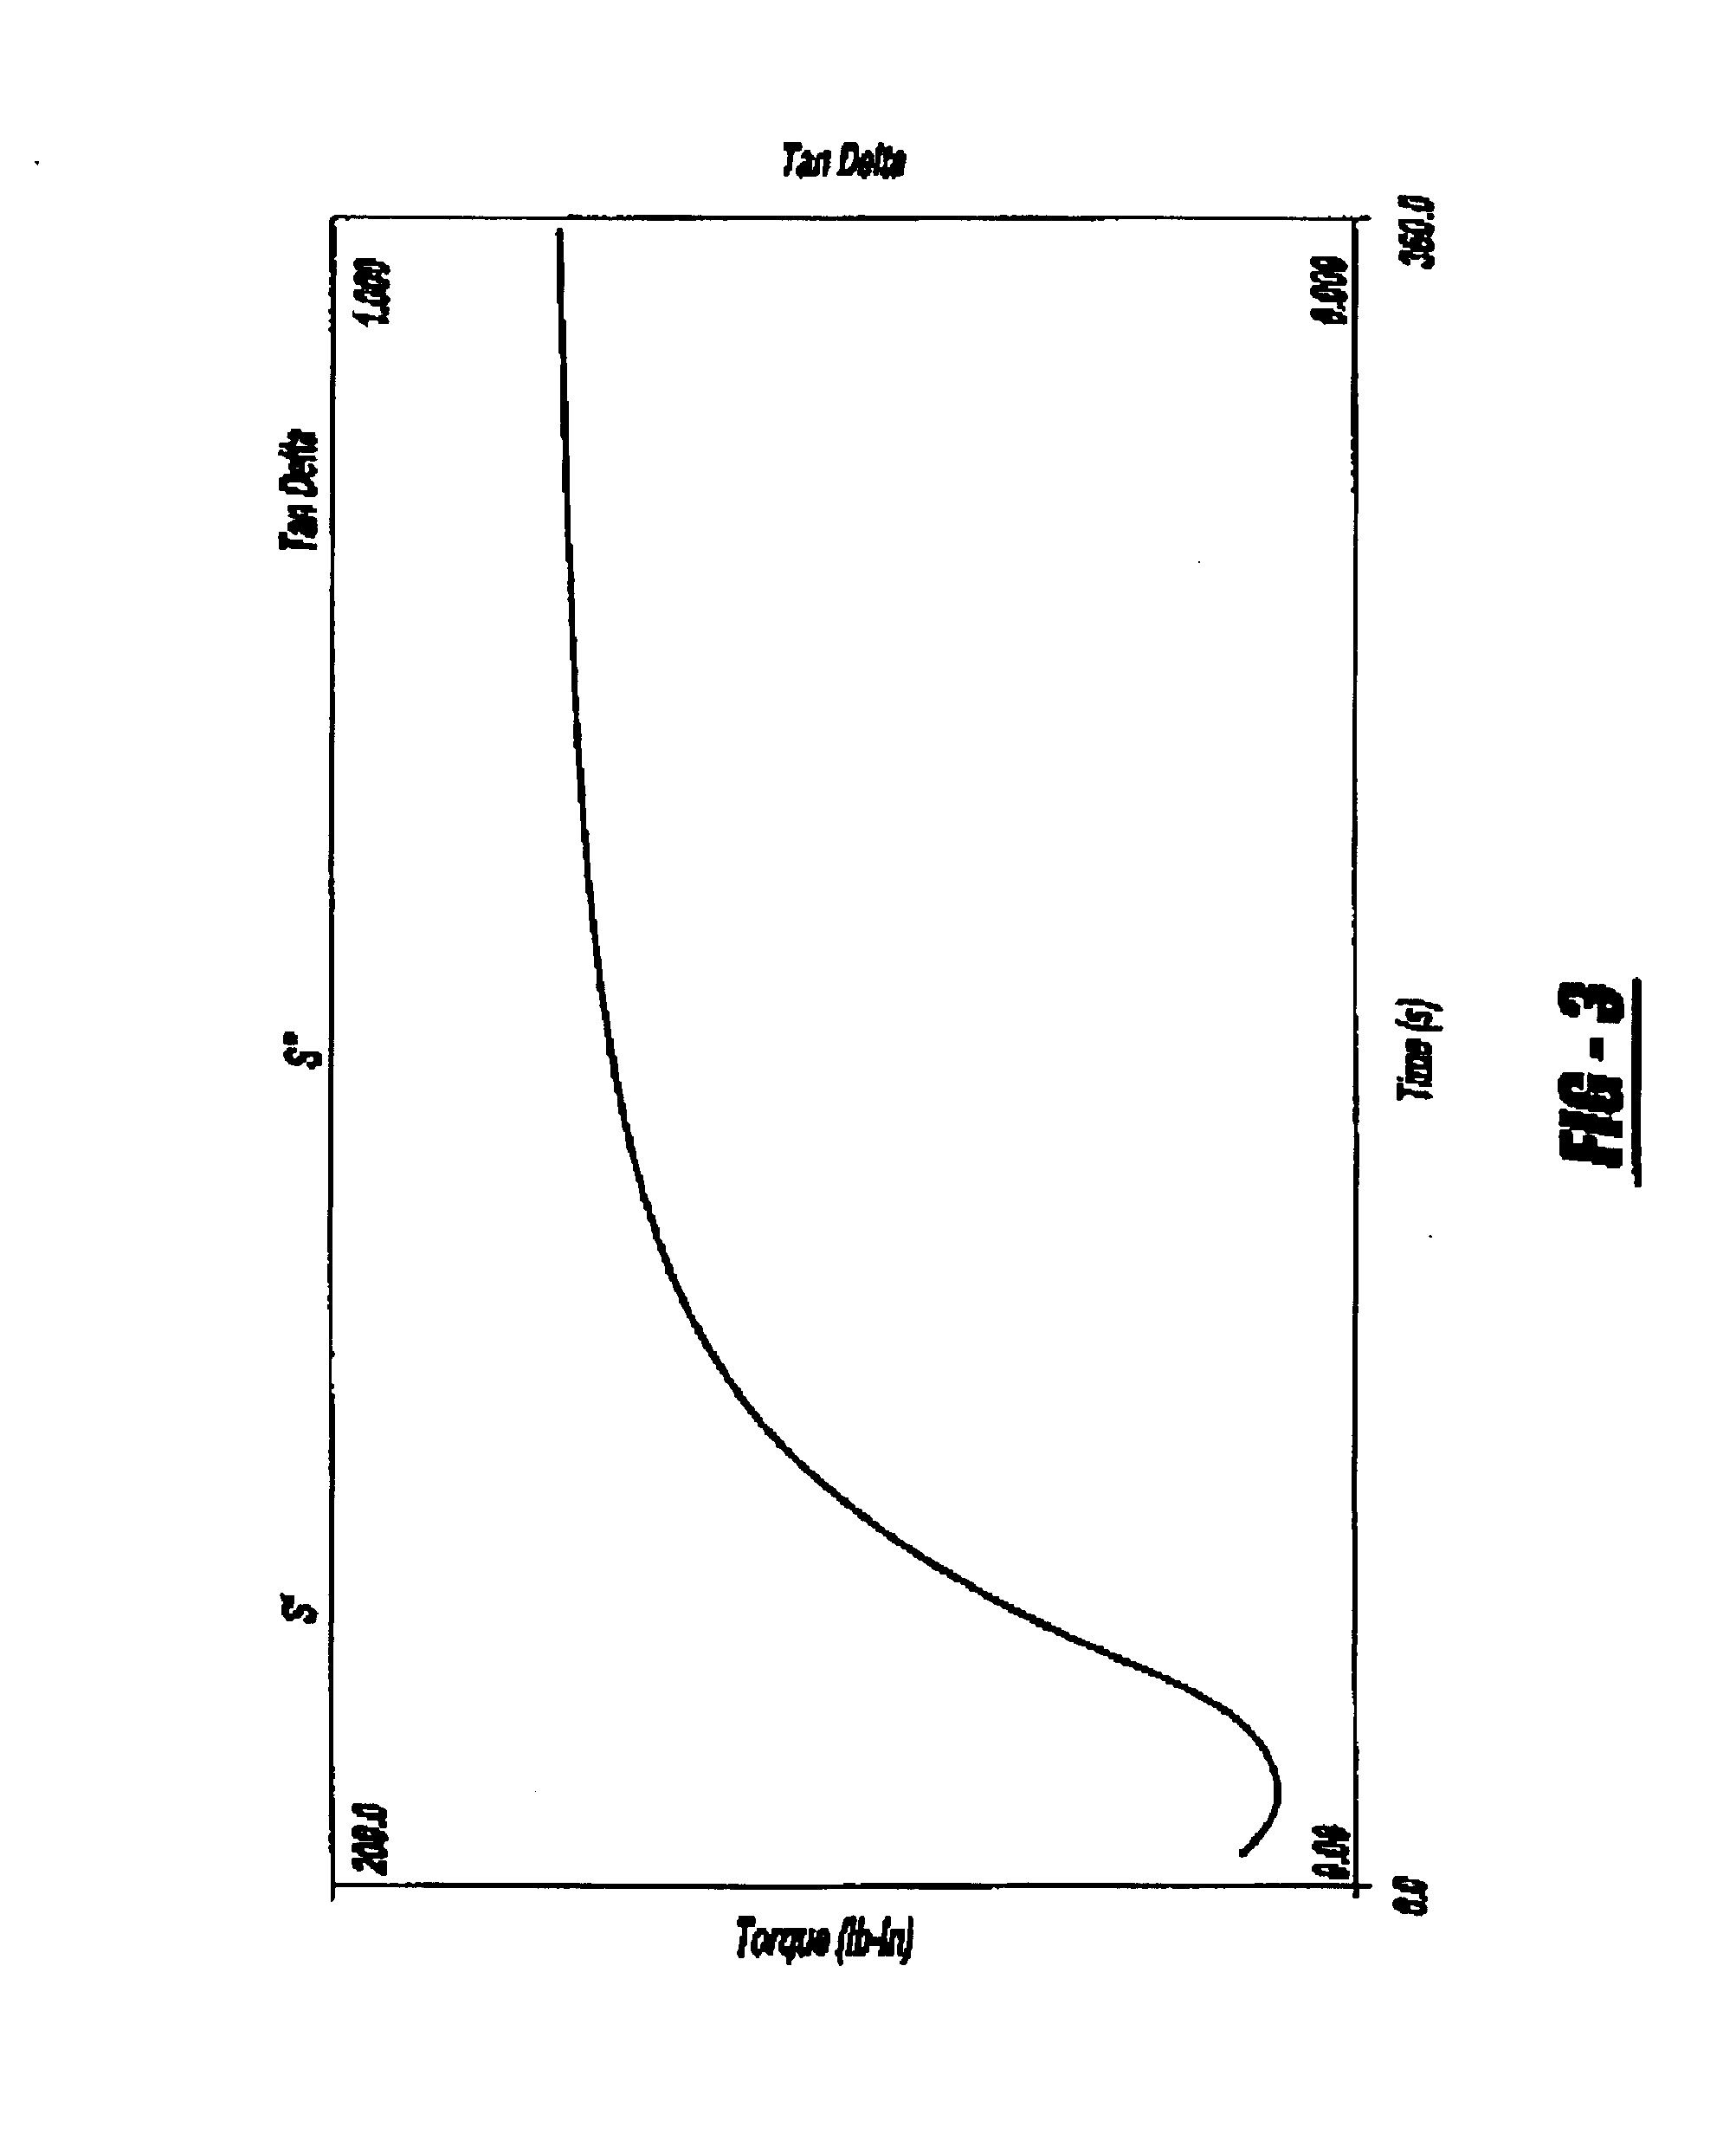 Fluoroelastomer composition